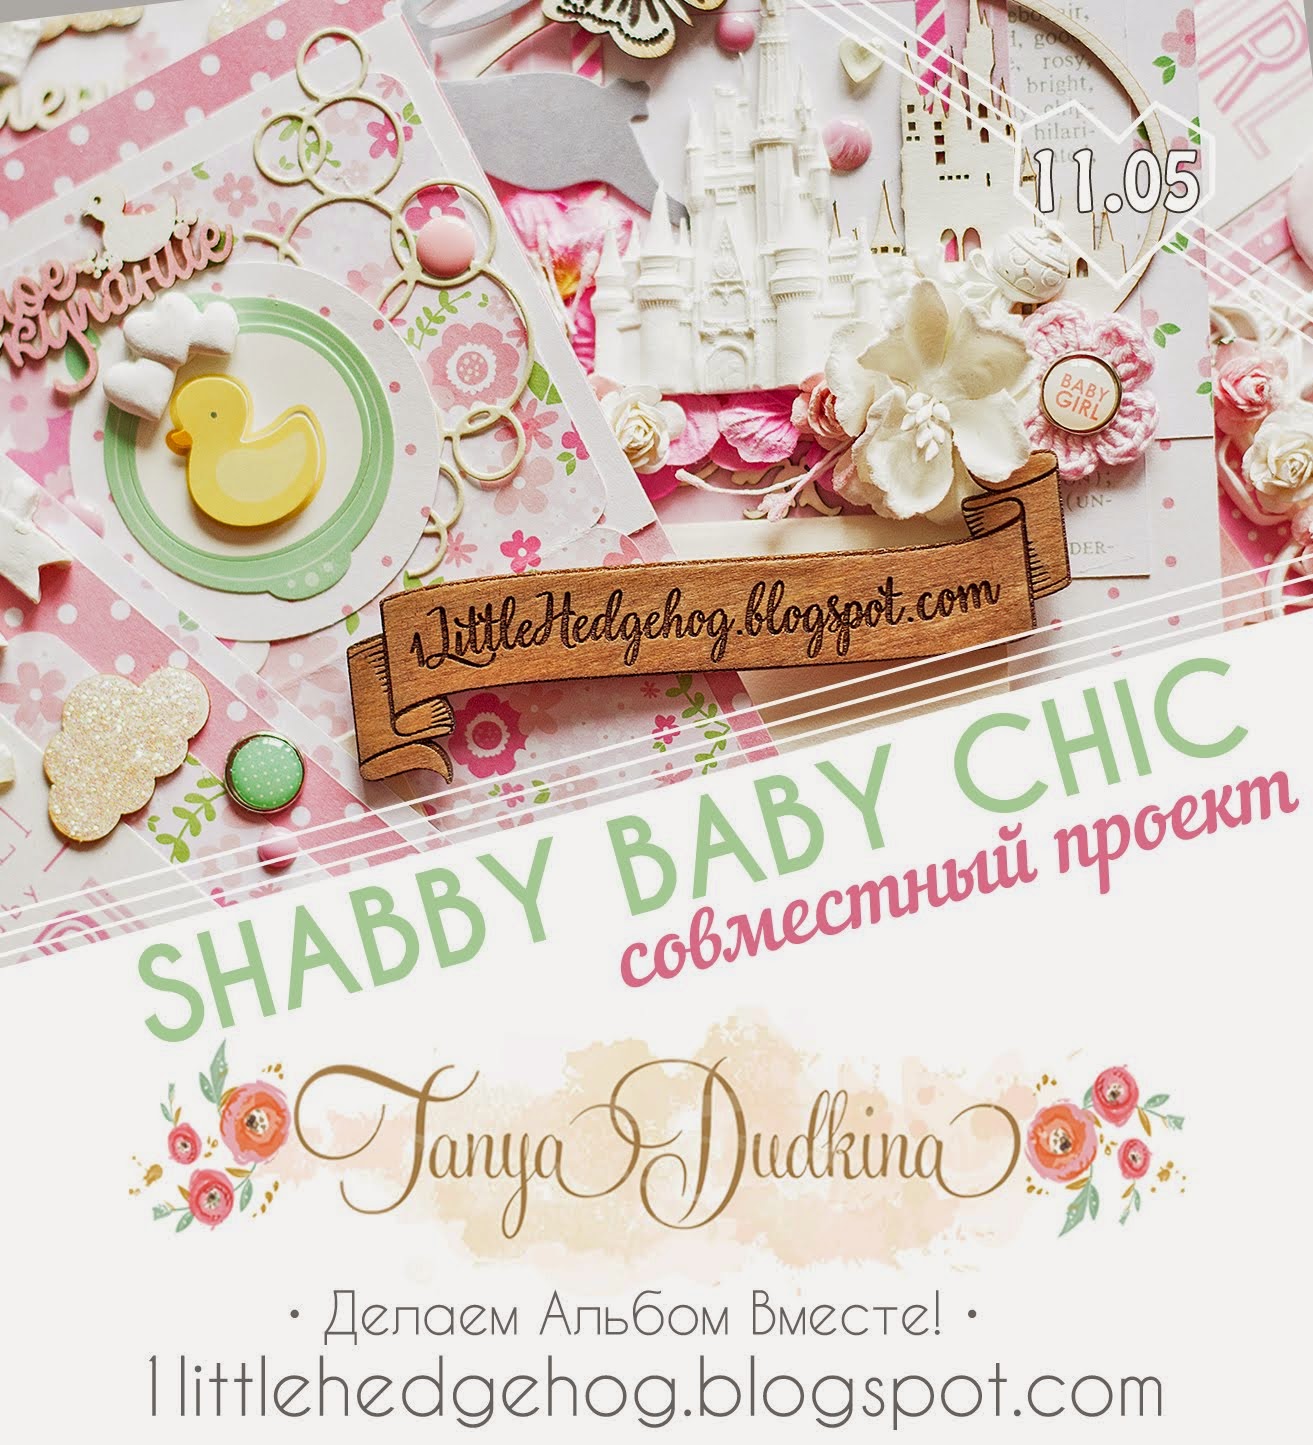 СП "Shabby Baby Chic"